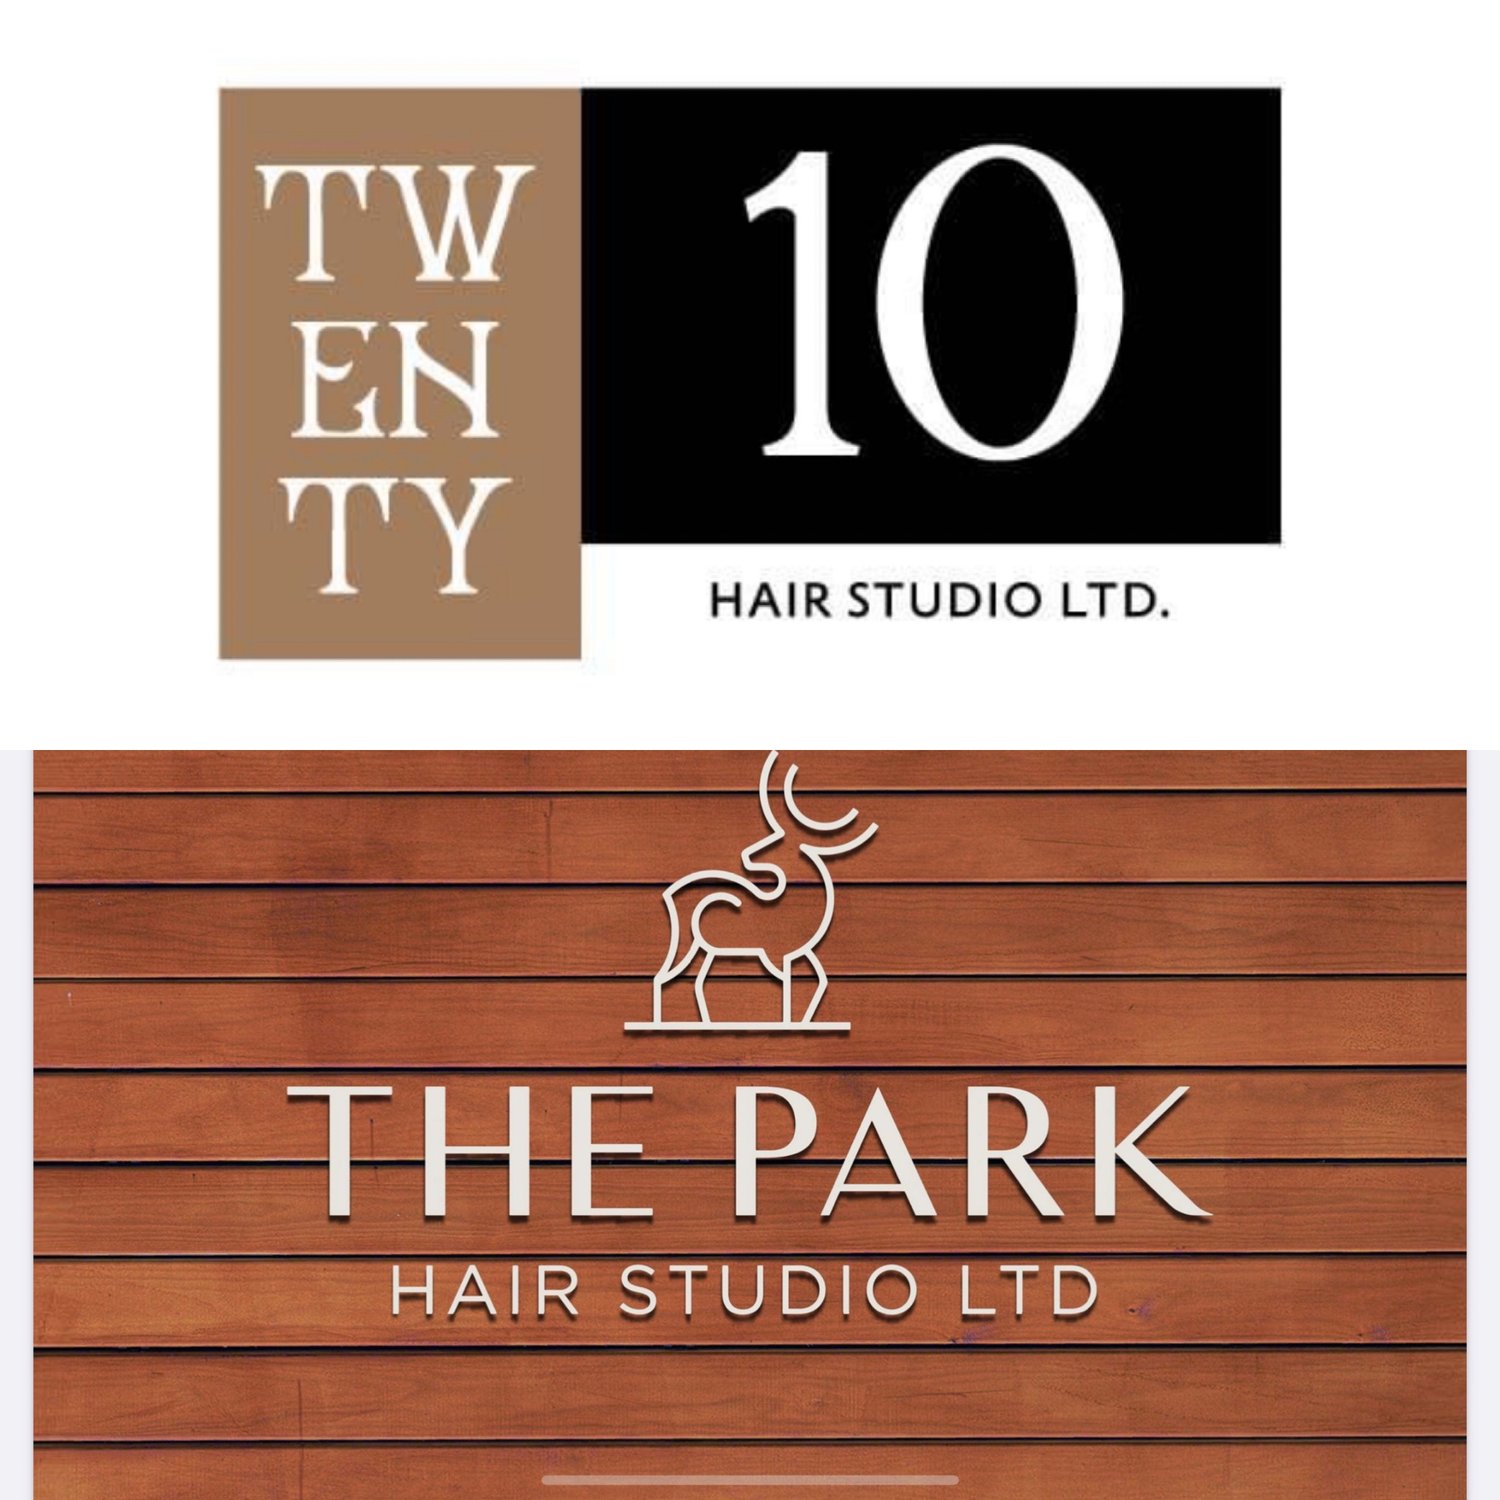 twenty10 now The Park Hair Studio ltd